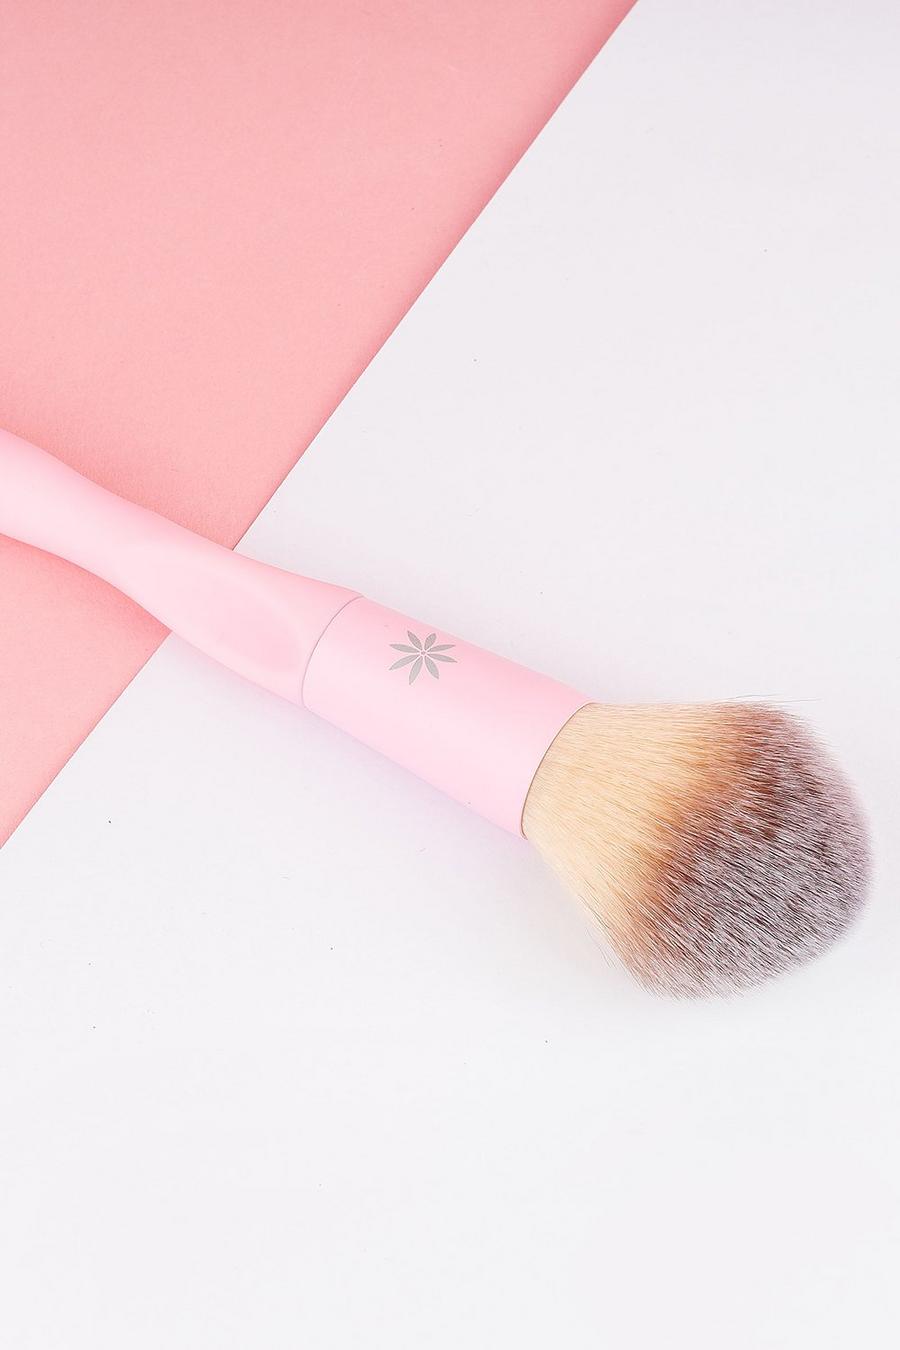 Baby pink rosa Brushworks Hd Tapered Powder Brush